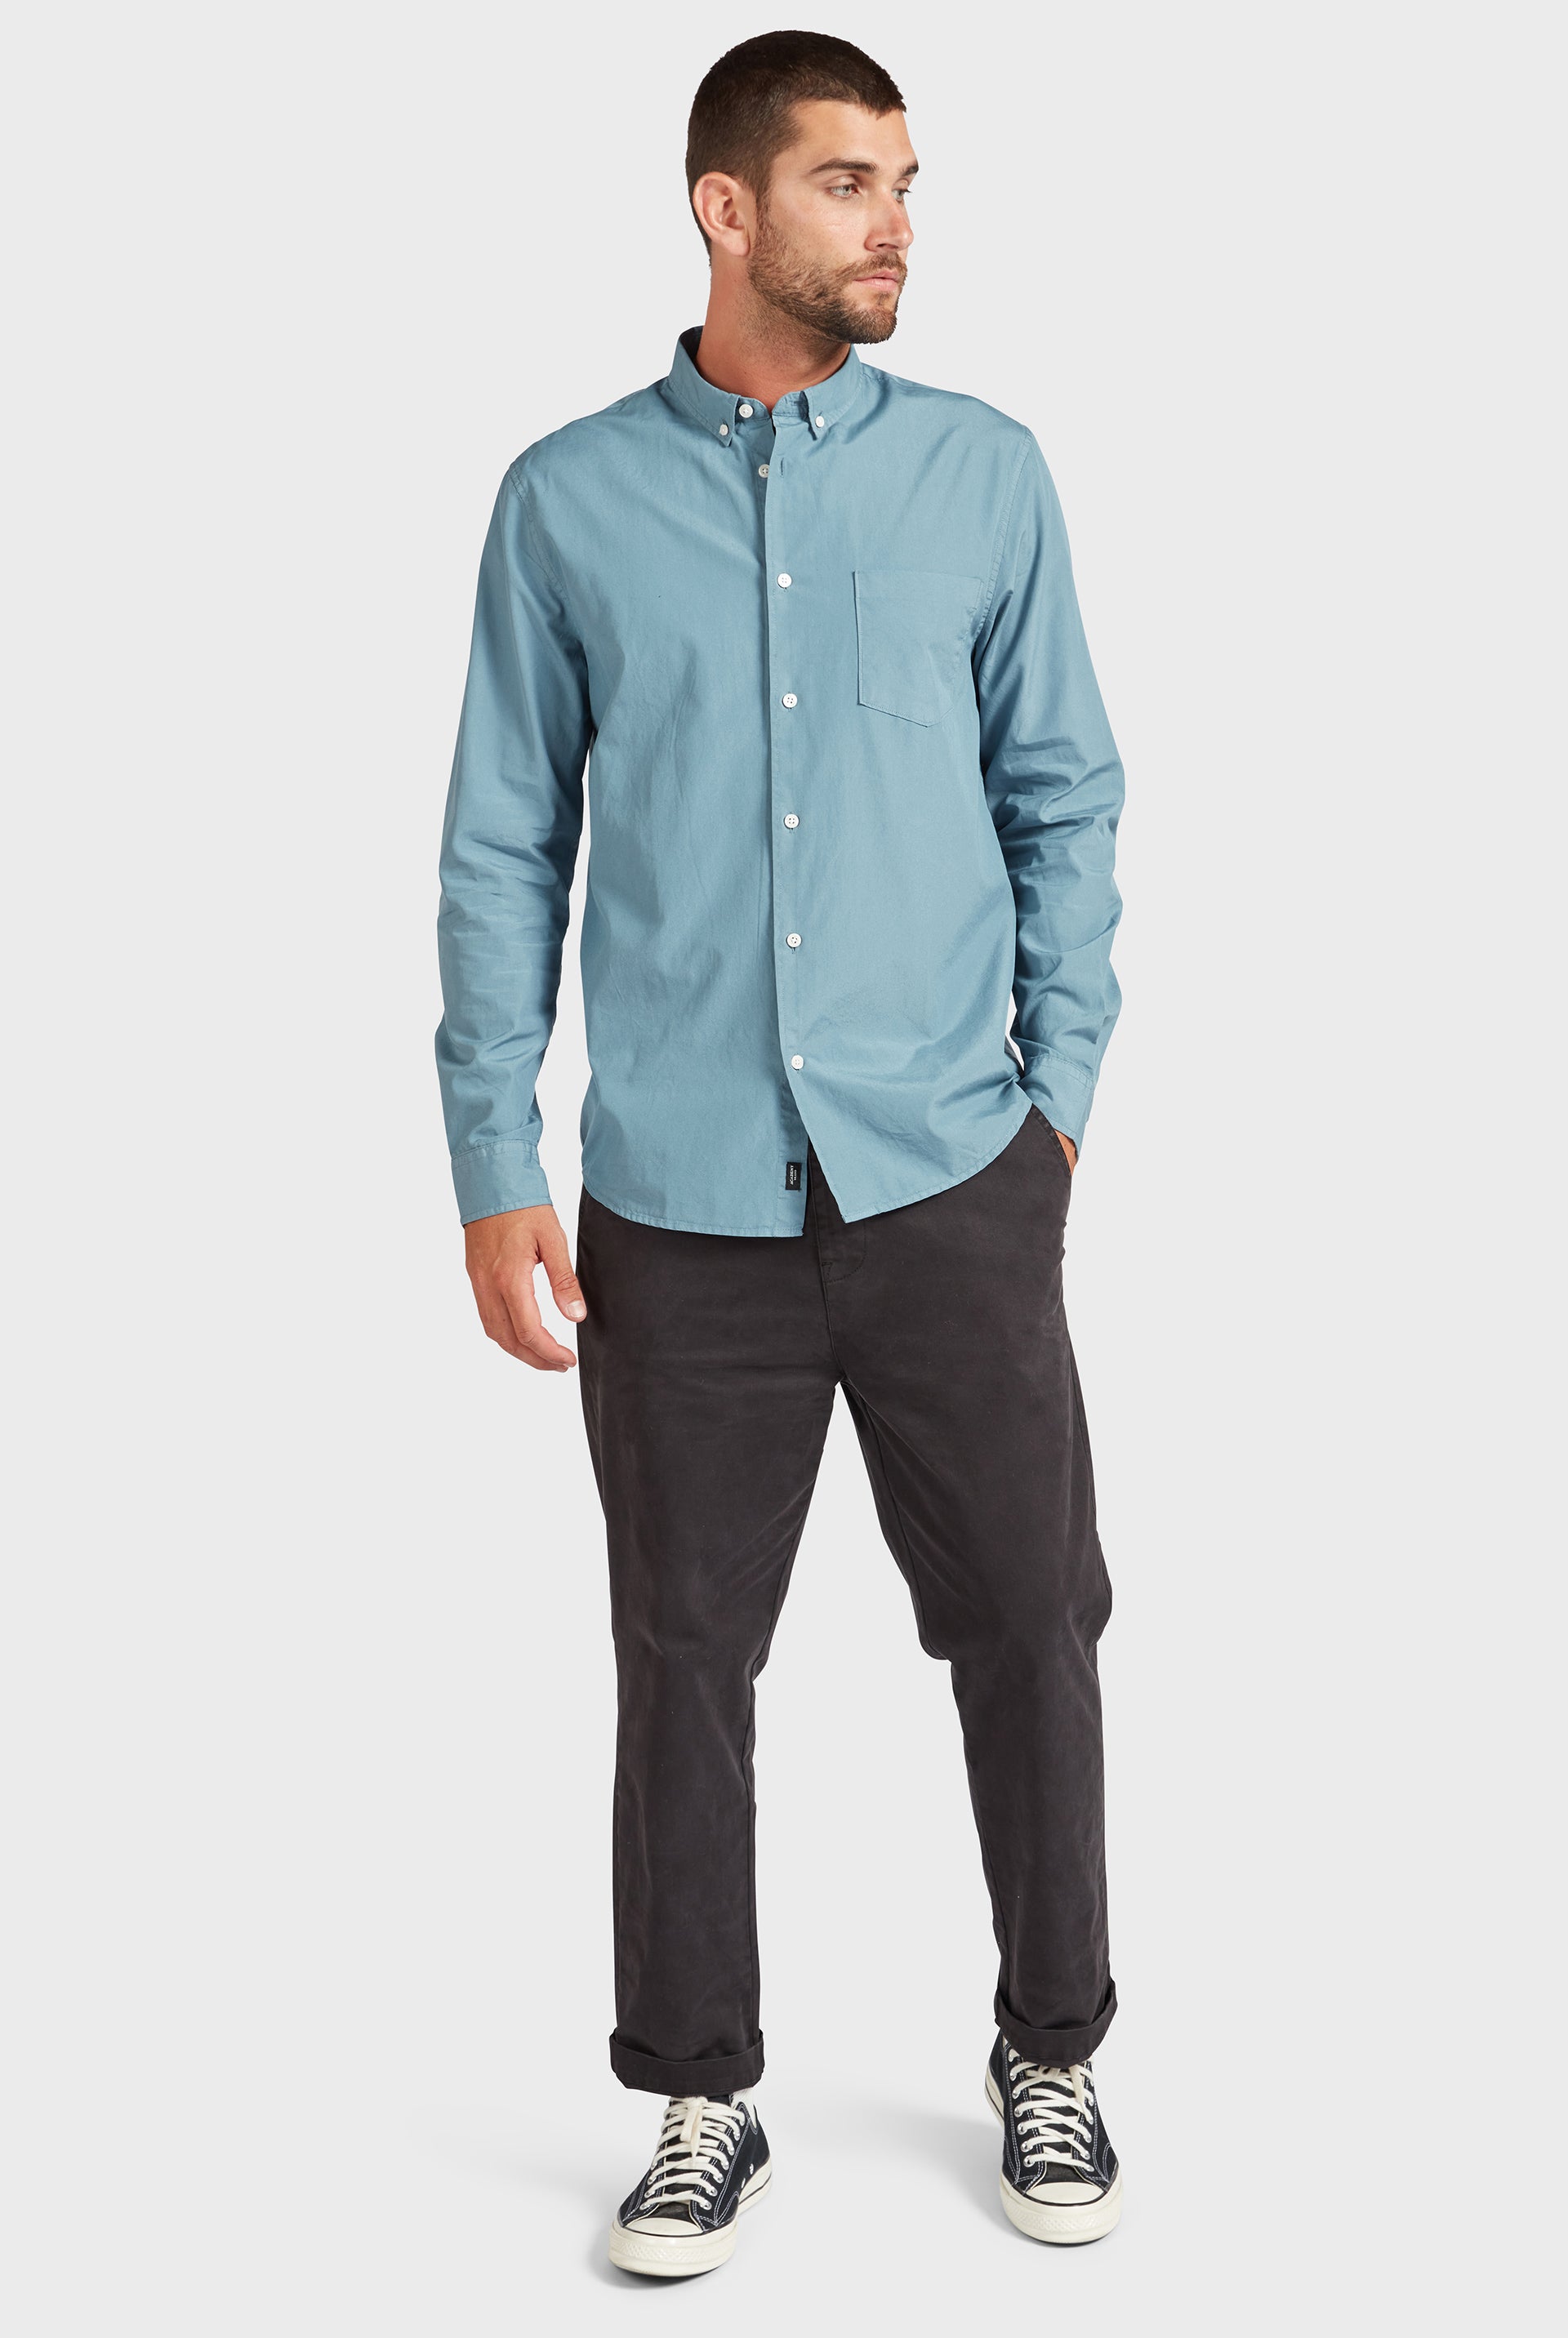 Frank Poplin Shirt in Horizon blue | Academy Brand | Hemden